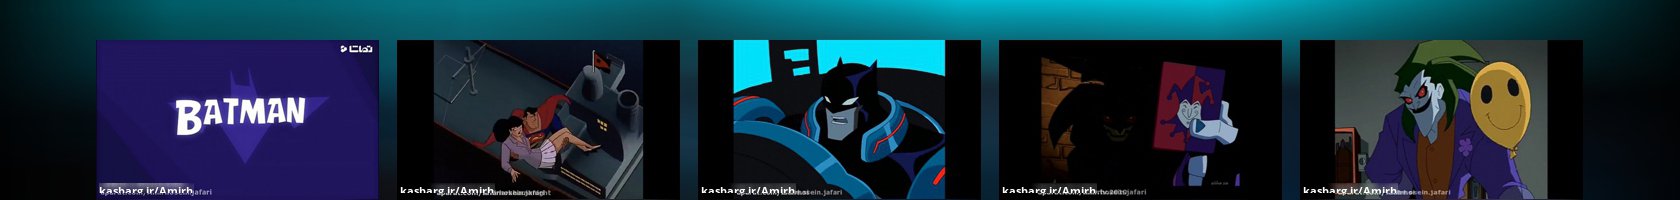  Amirhosein.Batman_Comic Book Channel